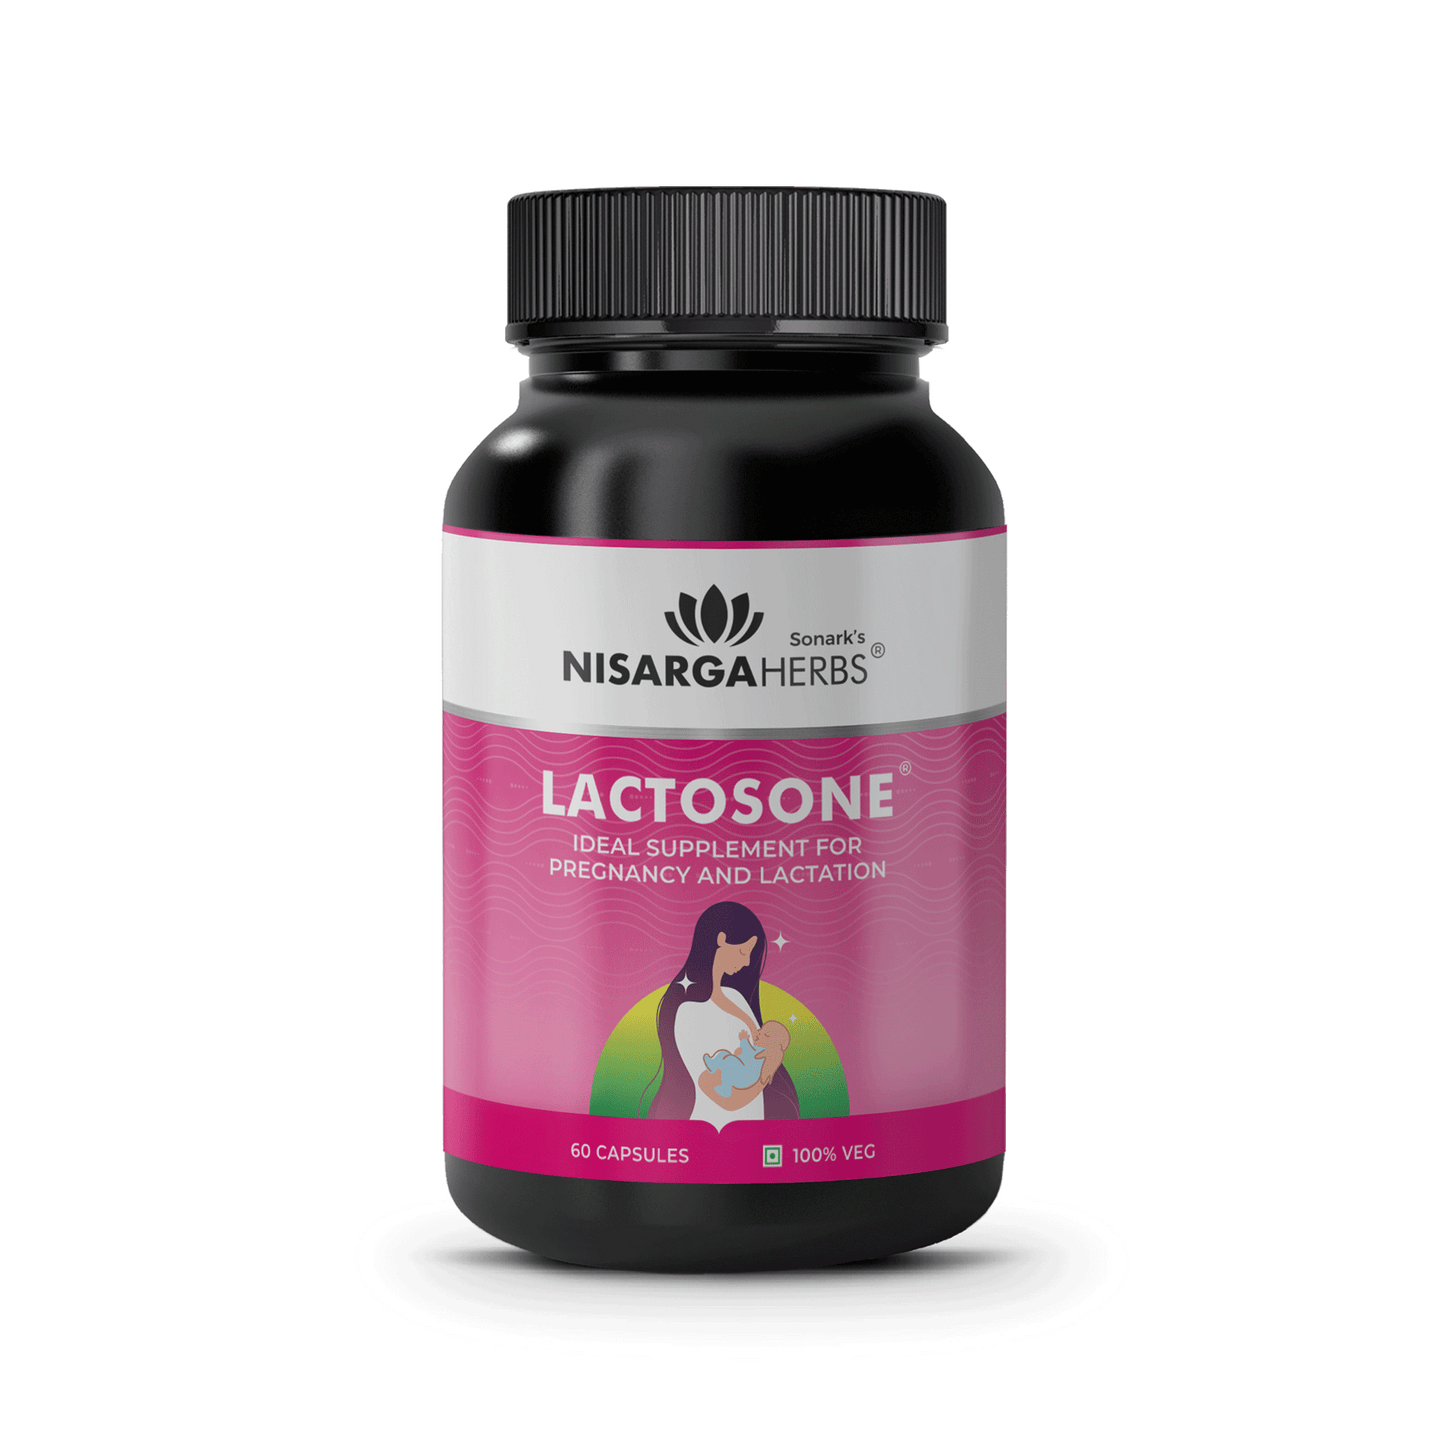 Lactosone - Ayurvedic lactation supplement for healthier pregnancy